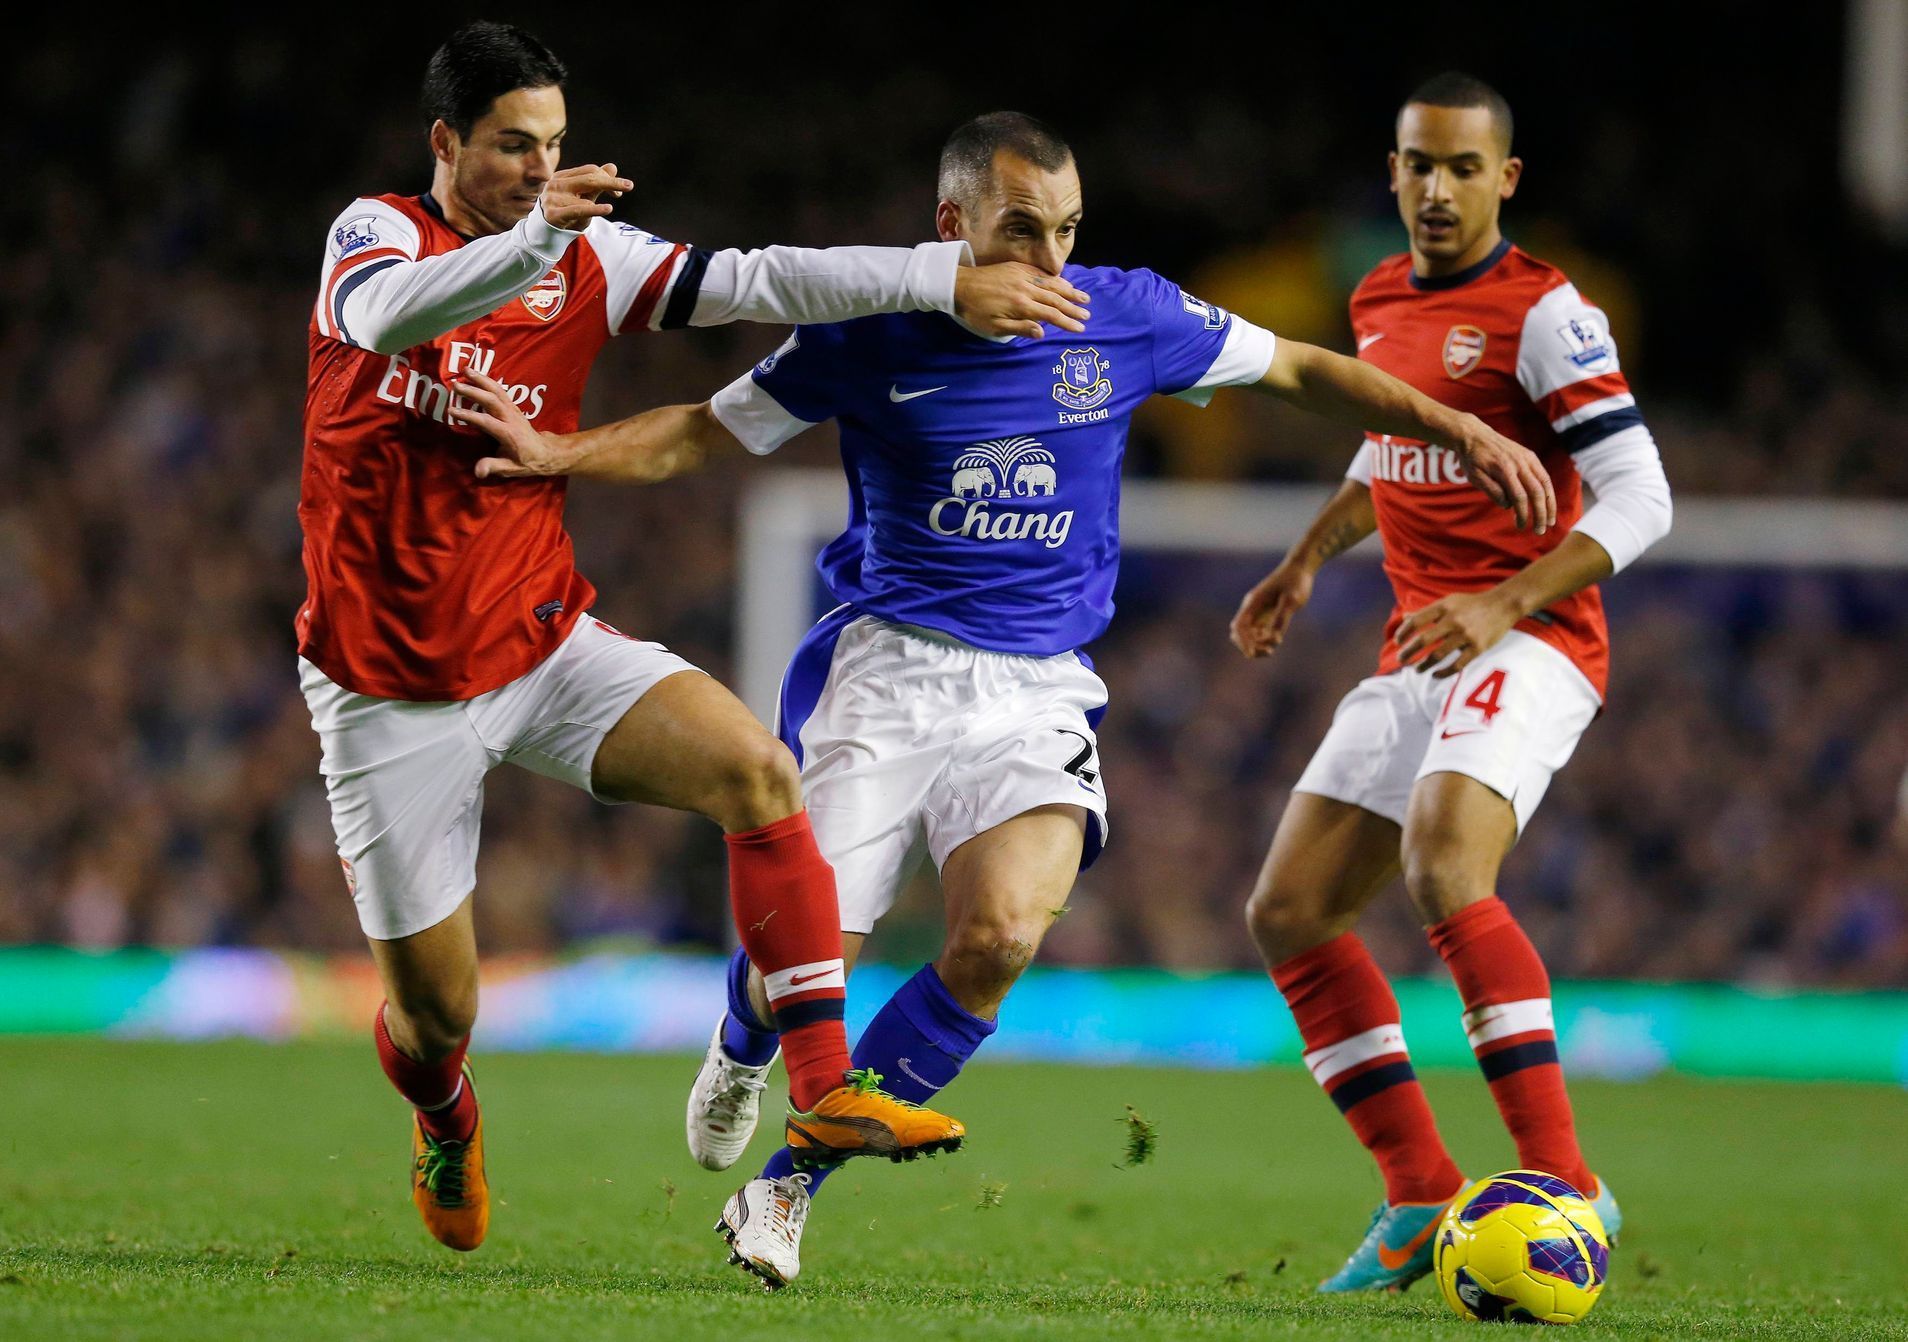 Everton - Arsenal (Arteta a Walcott v boji o míč)